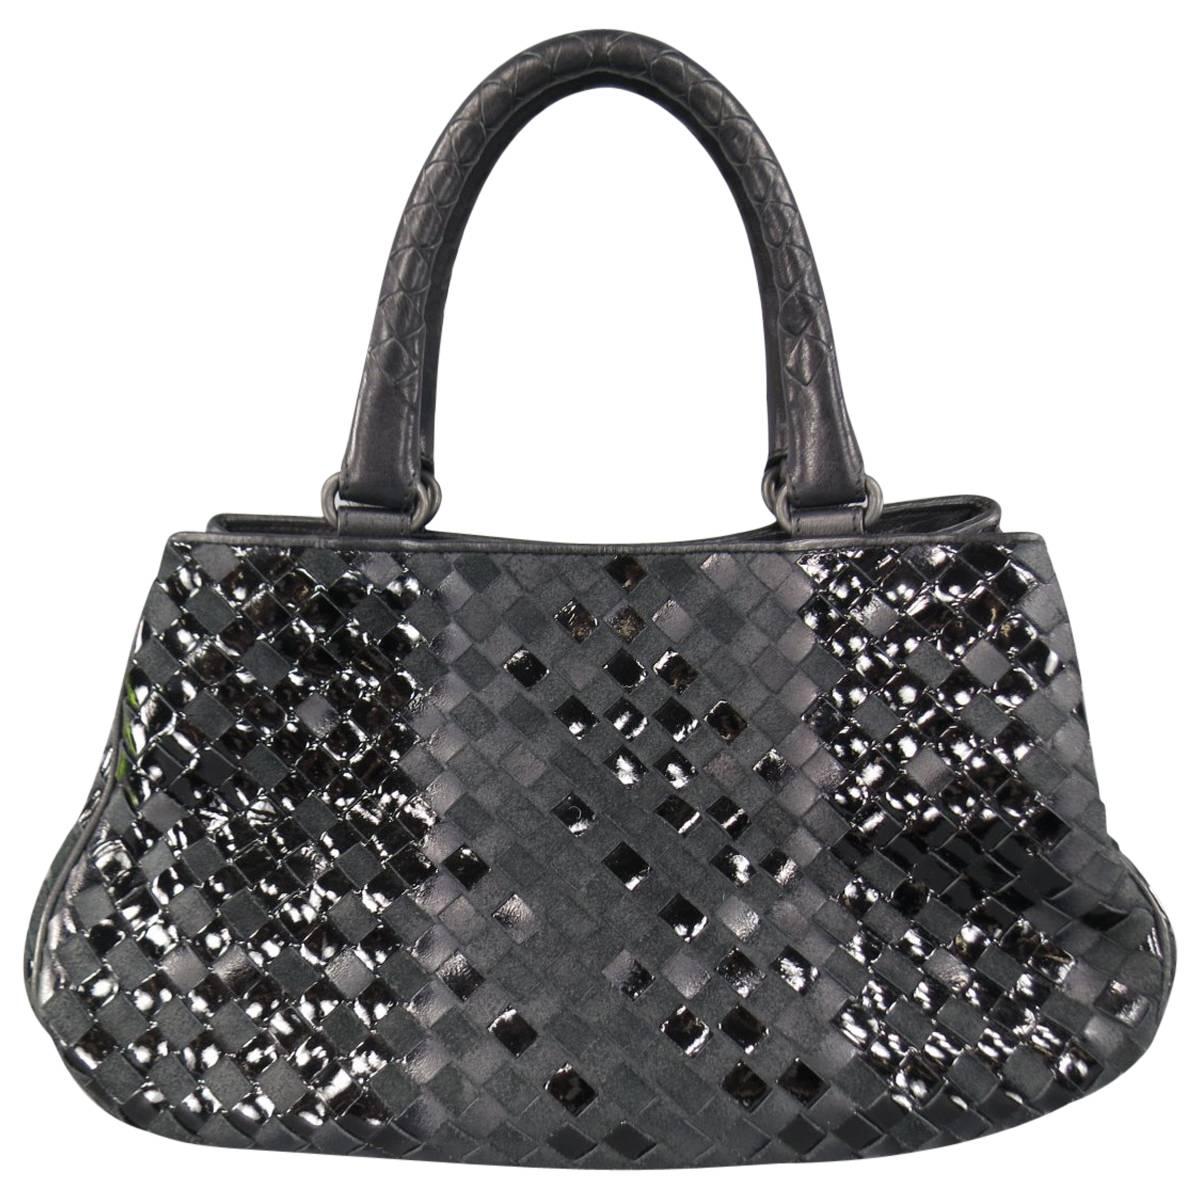 BOTTEGA VENETA Black Leather Suede & Patent Intrecciato Handbag